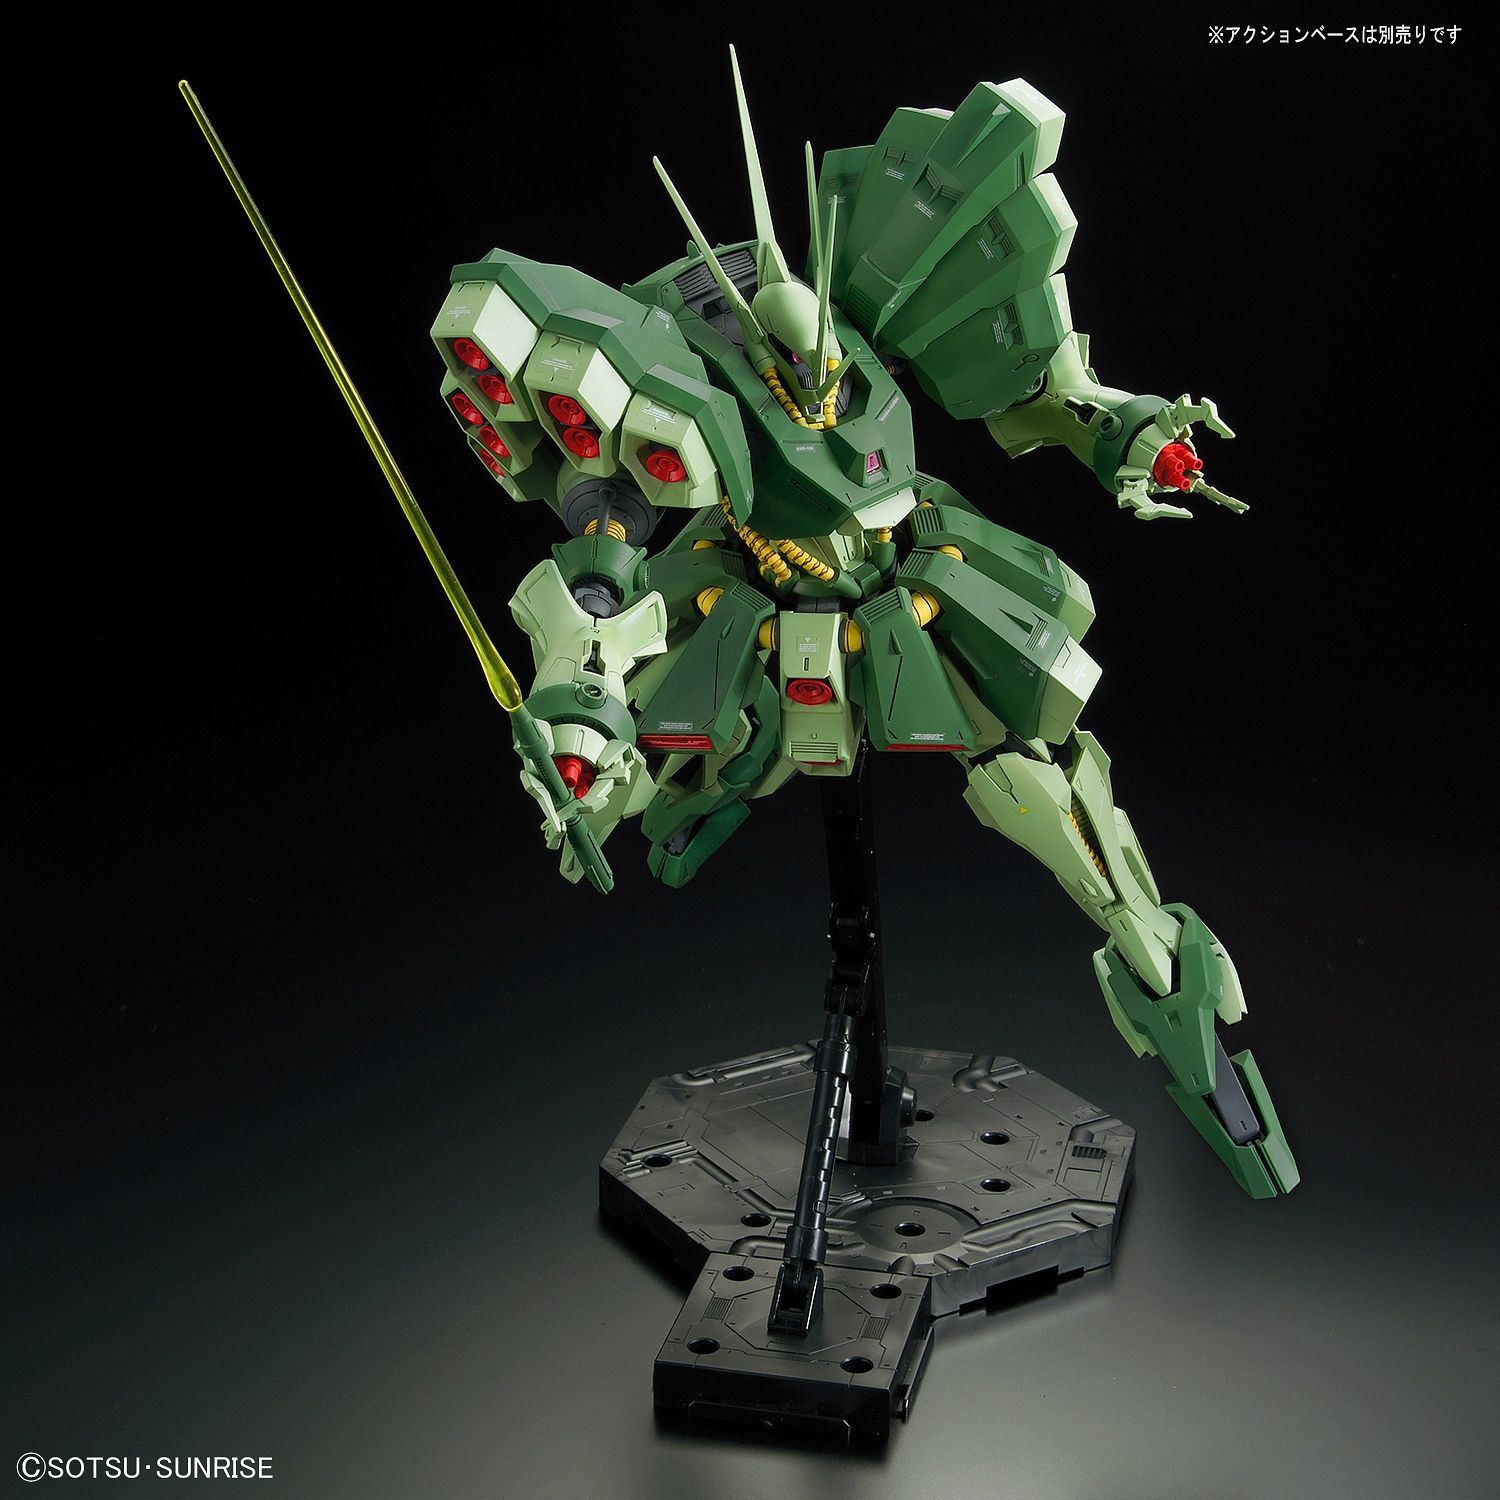 1/100 Non Grade Gundam RE/100 AMX-103 Hamma Hamma - gundam-store.dk